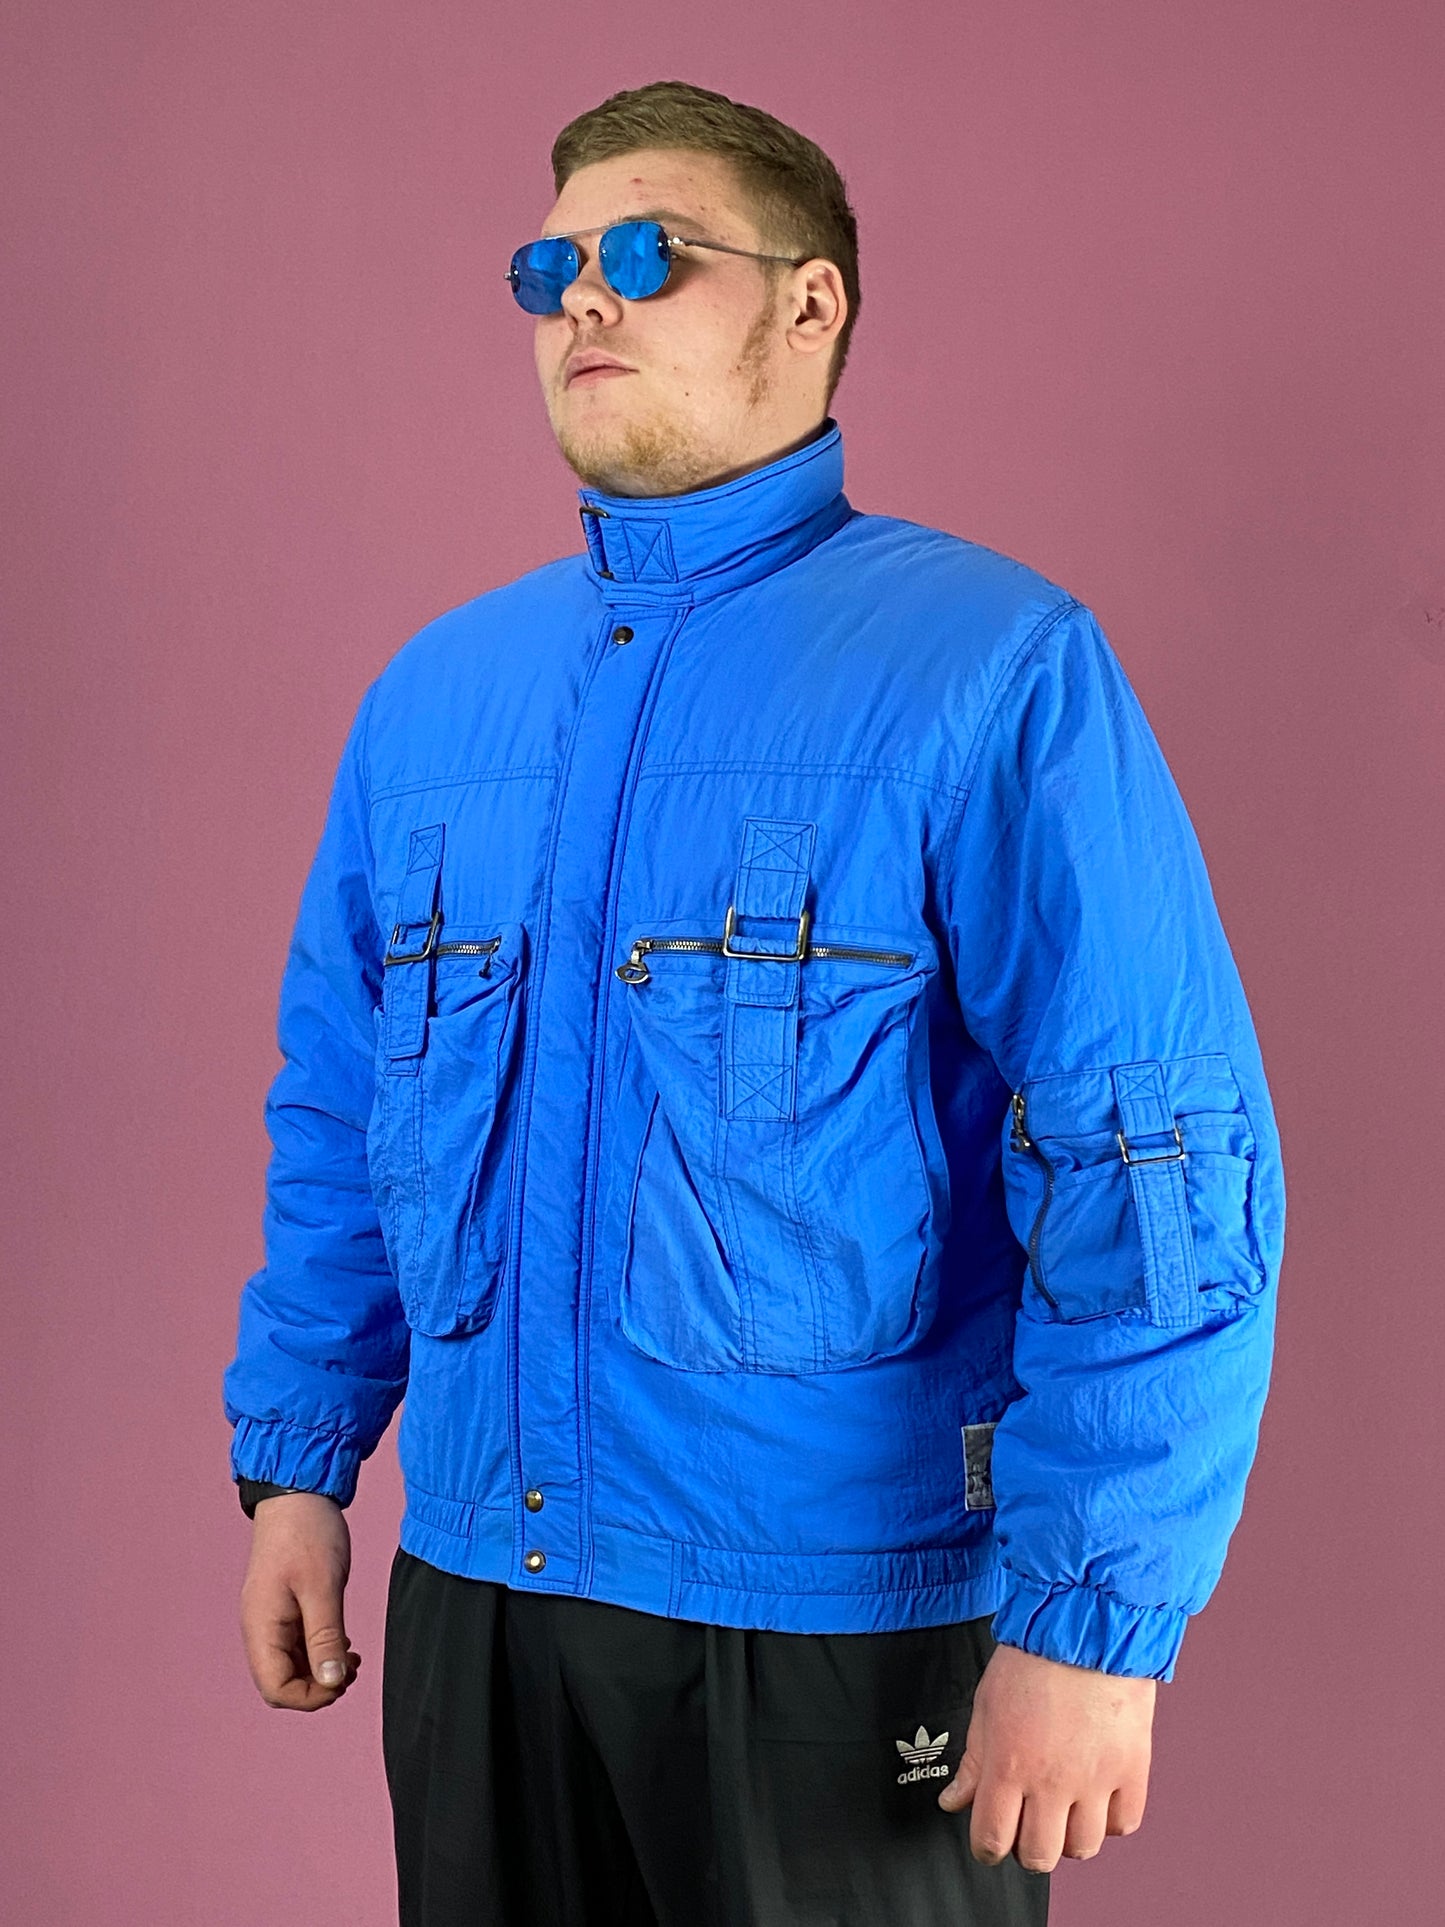 90s 5 Avenue Vintage Men's Ski Jacket - Large Blue Nylon